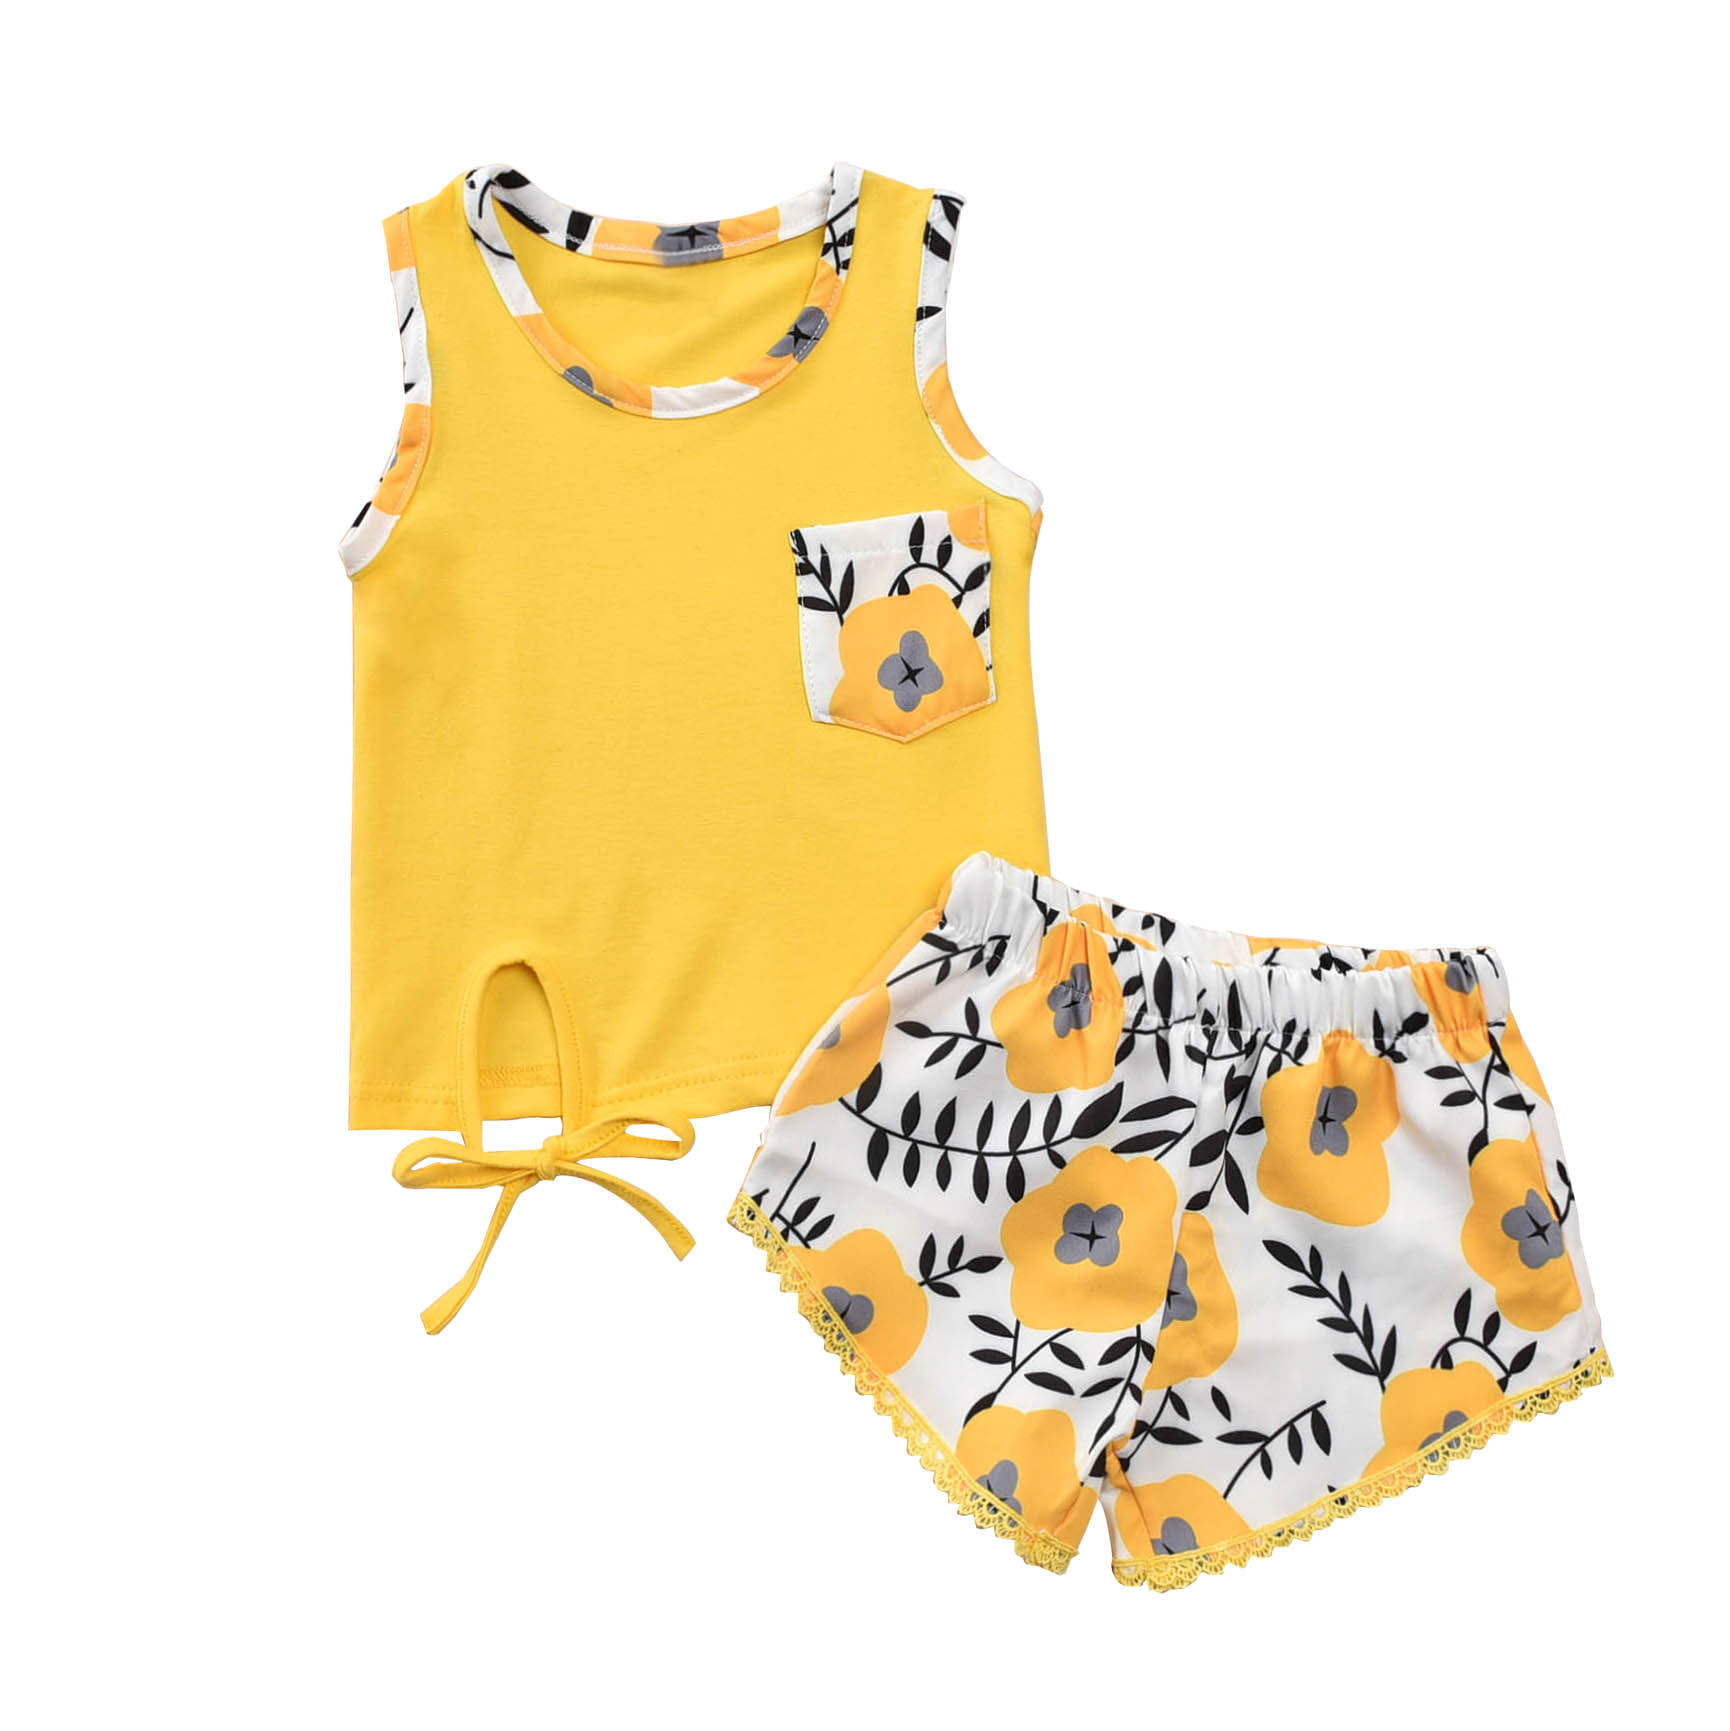 Womens Fashion Summer Yellow Lemon and Bee Garden Beach Shorts Casual Short Pants 